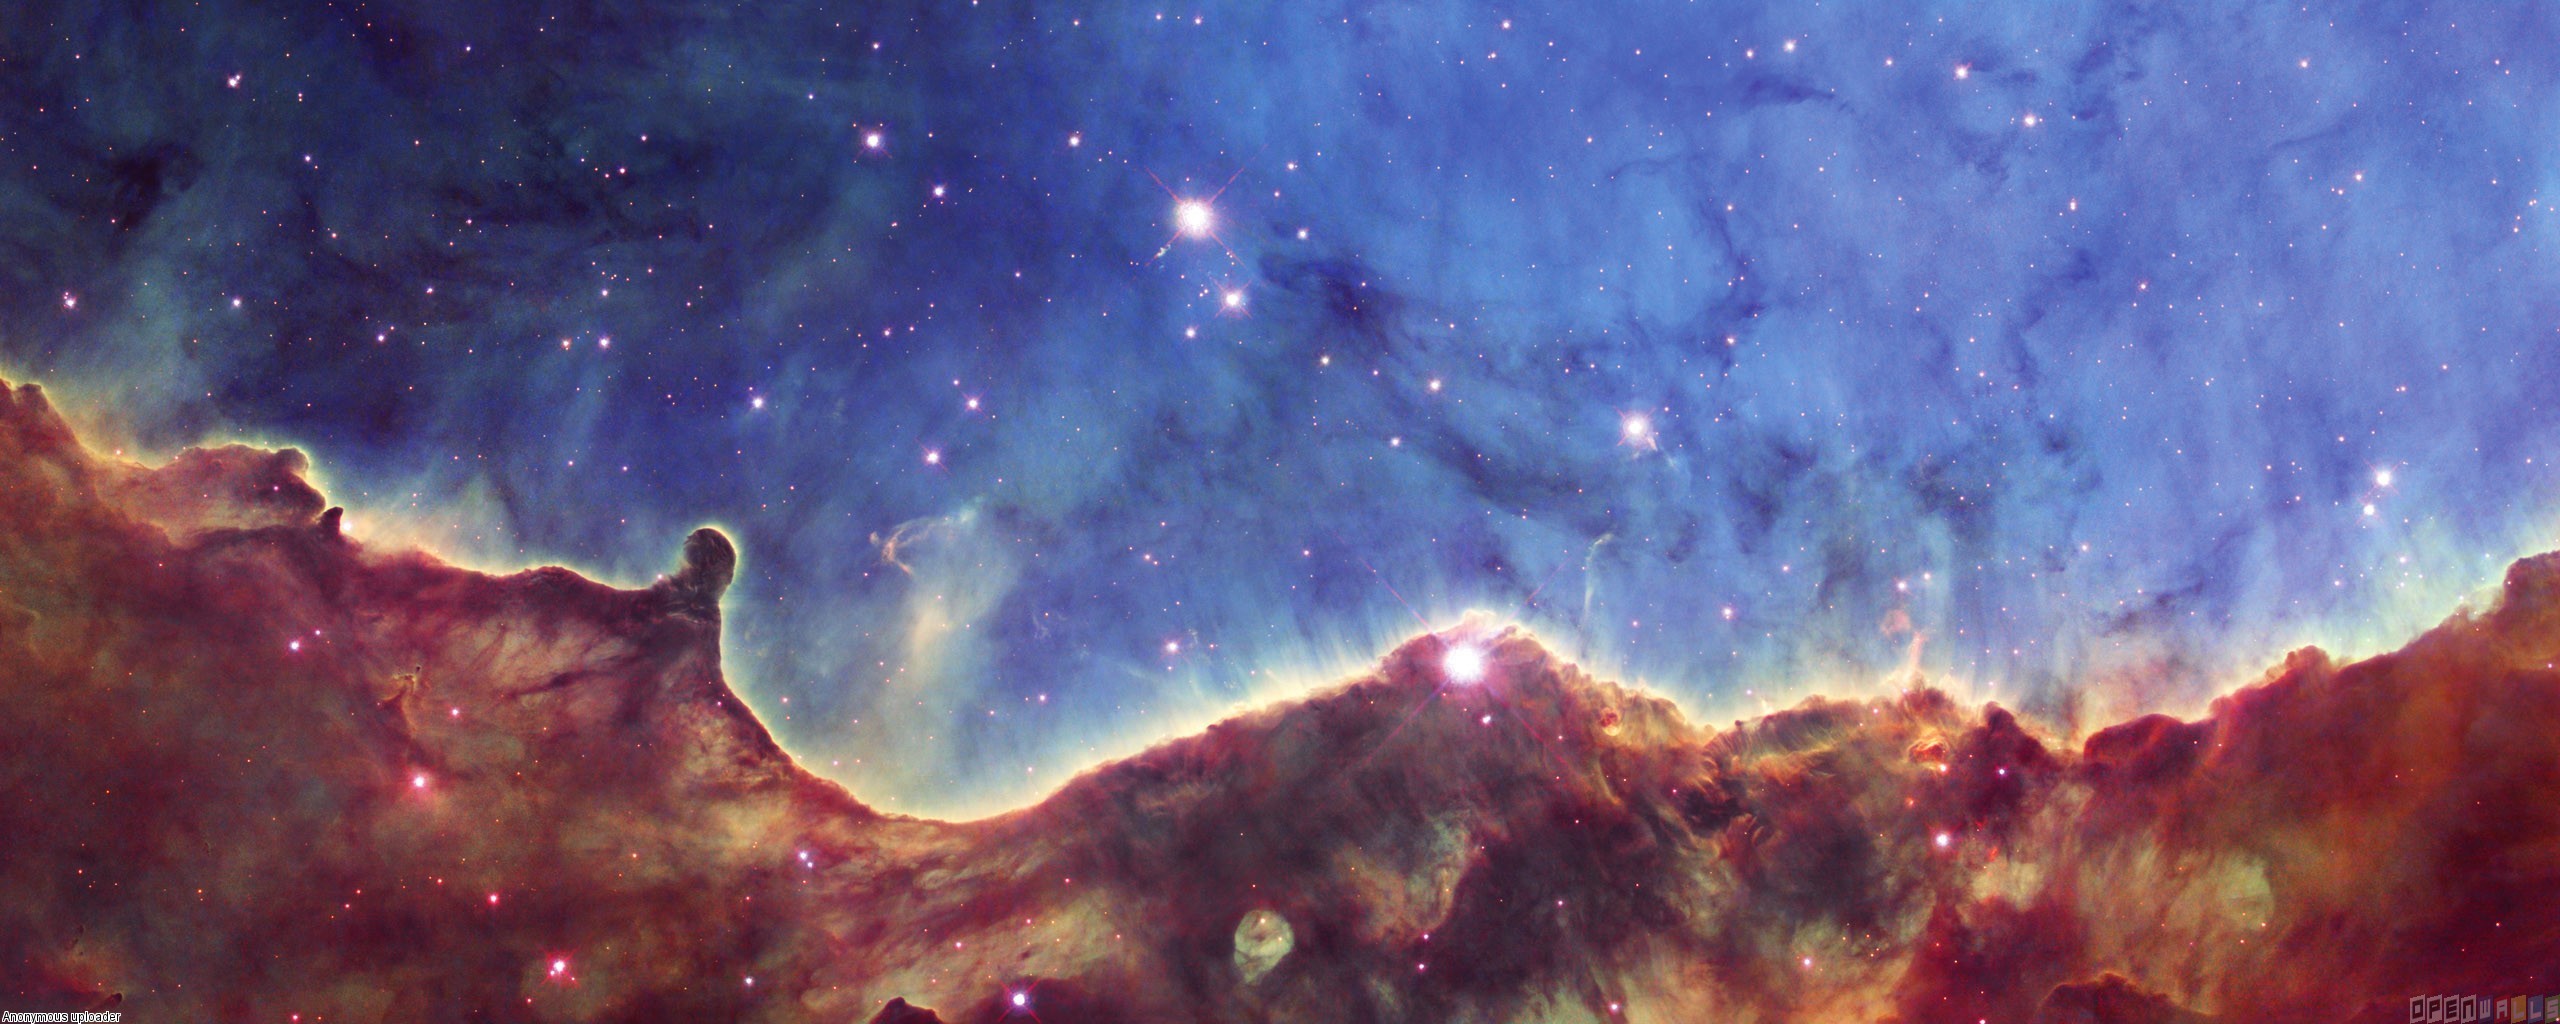 Carina Nebula Wallpaper Open Walls